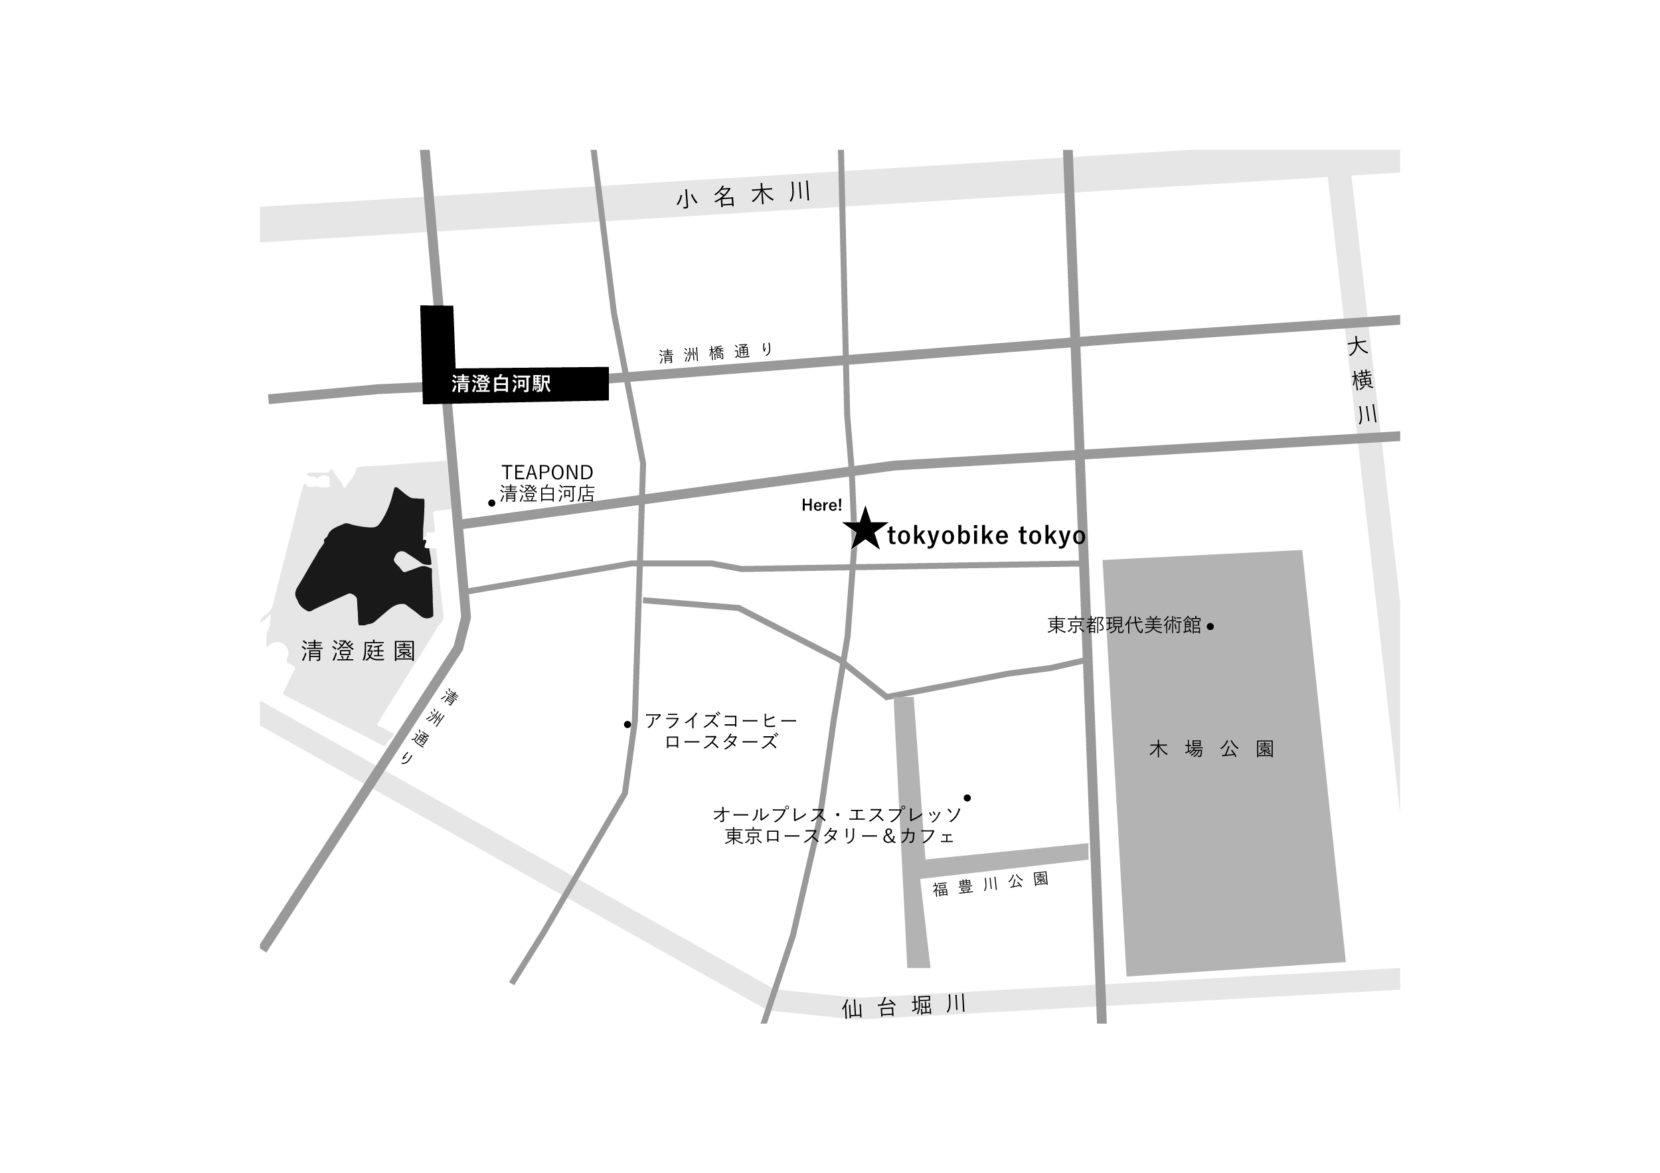 TOKYOBIKE TOKYO ACCESS MAP